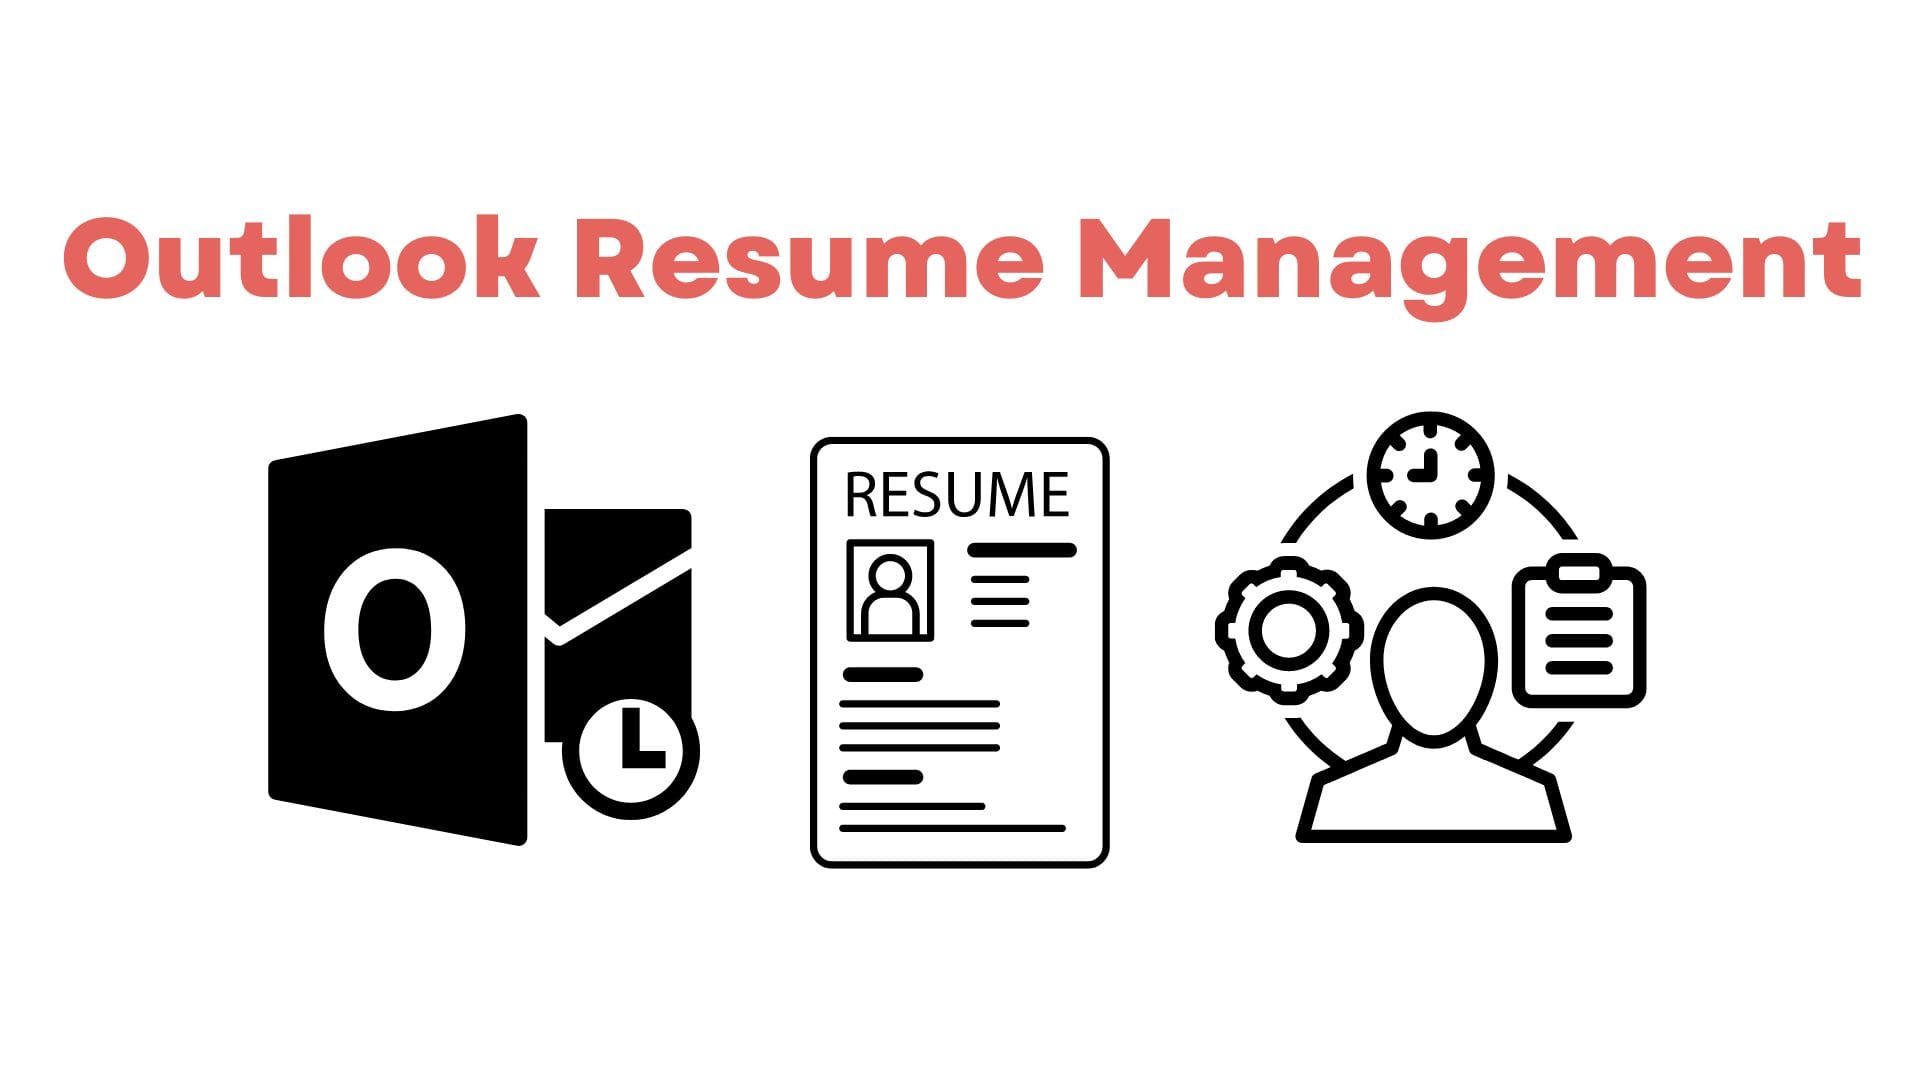 Outlook Resume Management